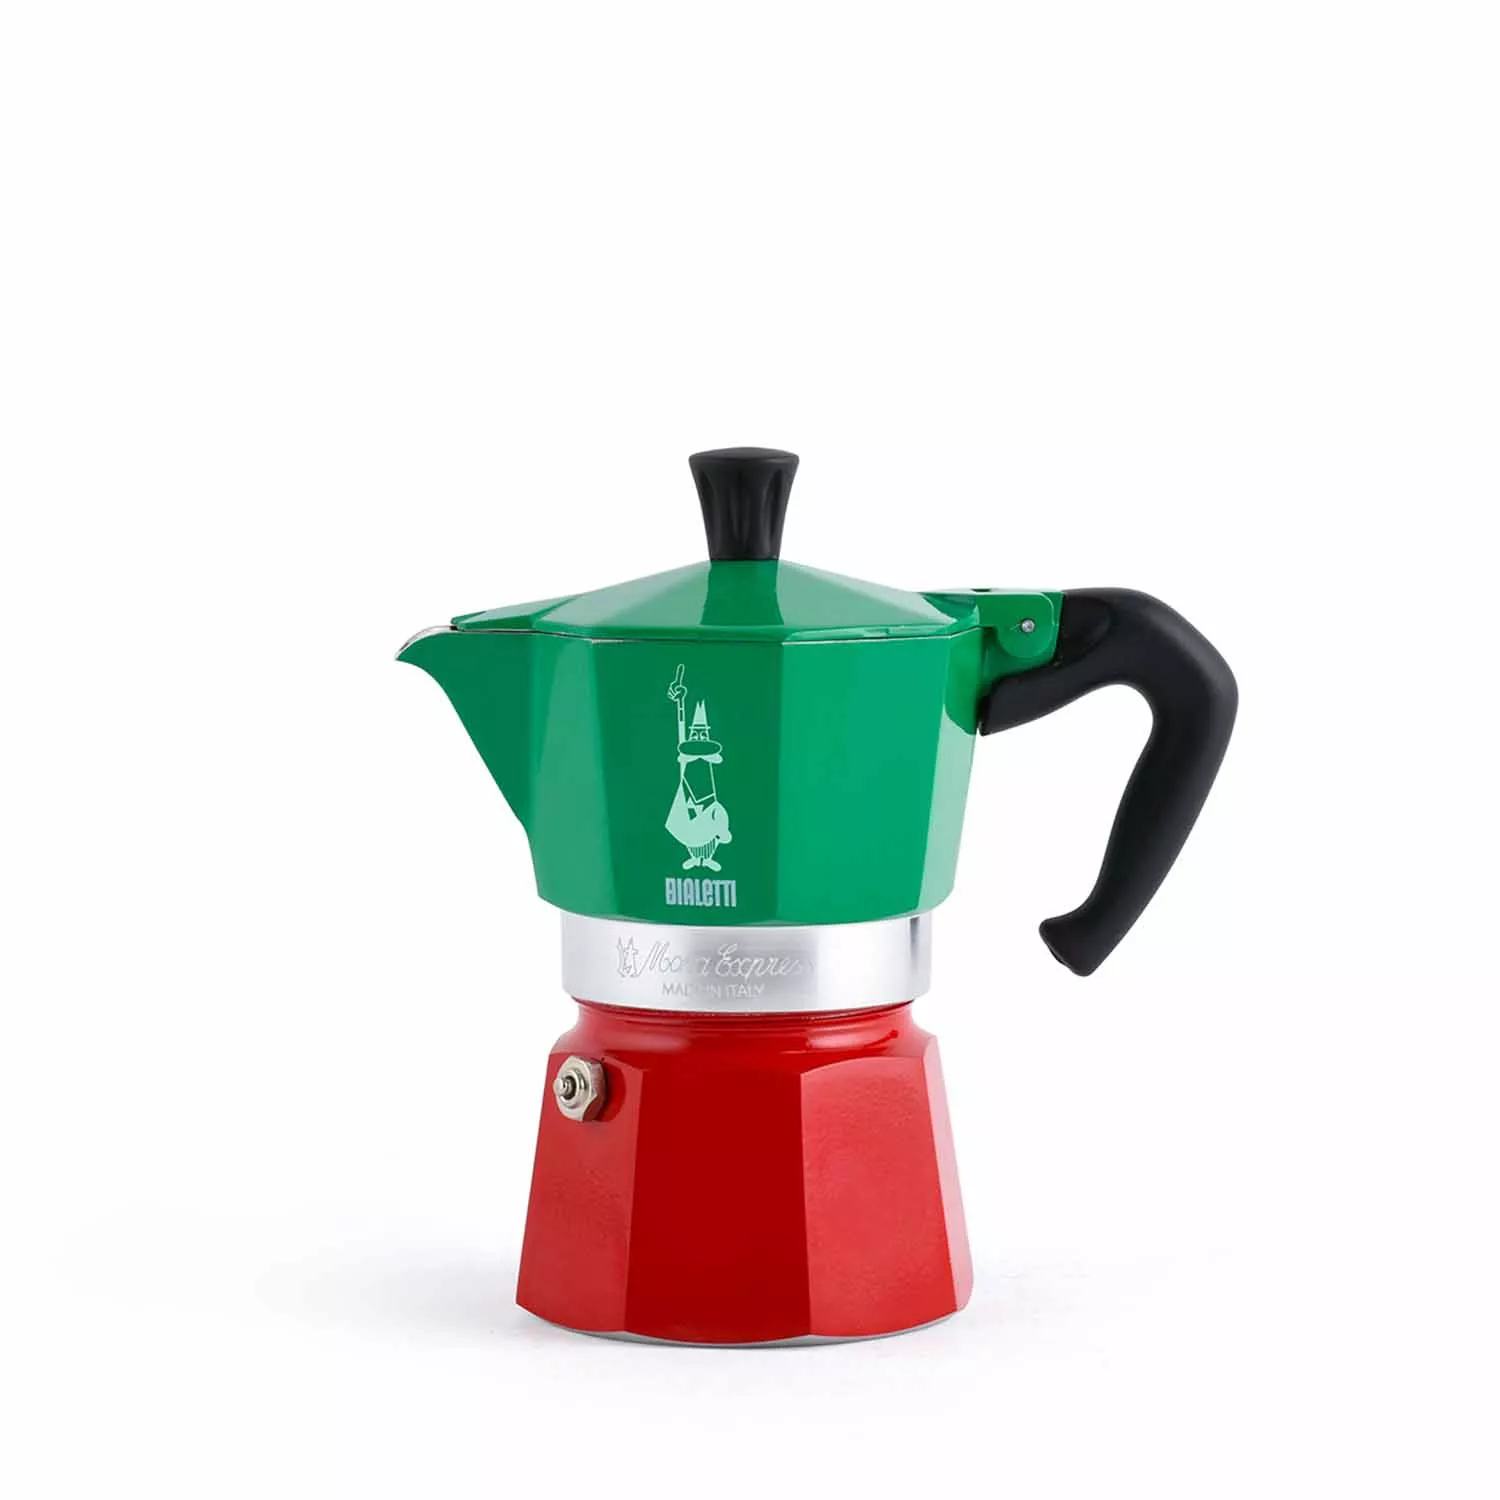 Bialetti Moka Express 6 cup Espresso Maker - Whisk